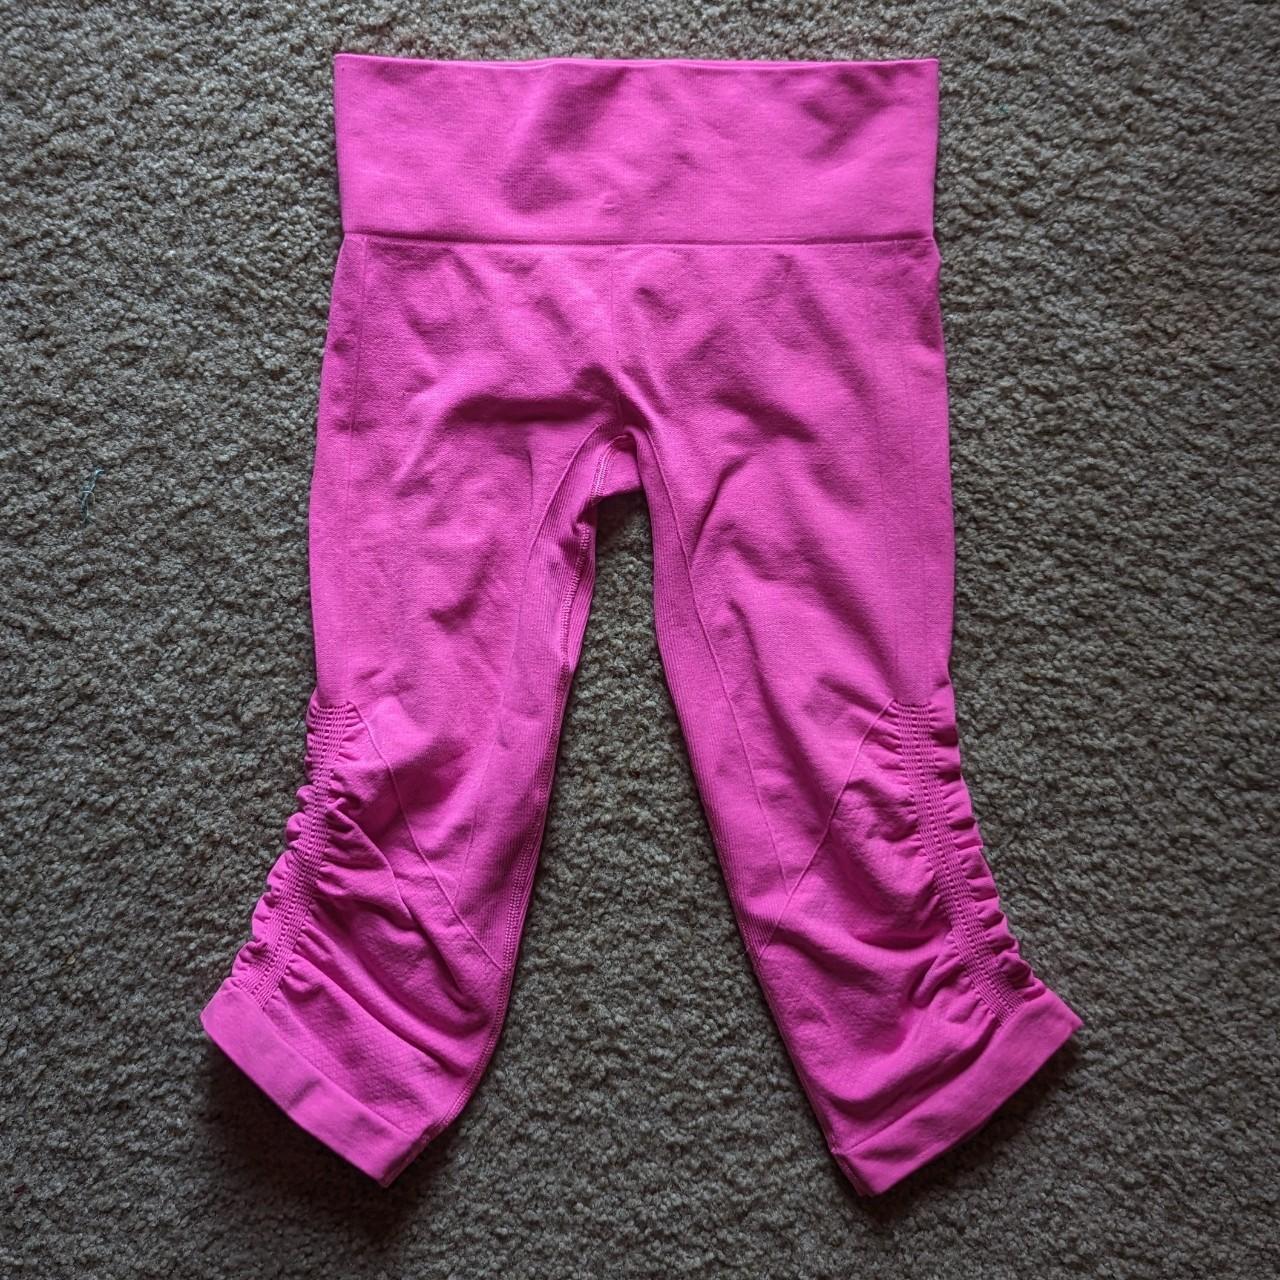 Lululemon Hot Pink Flow leggings. Stretchy knit Lulu